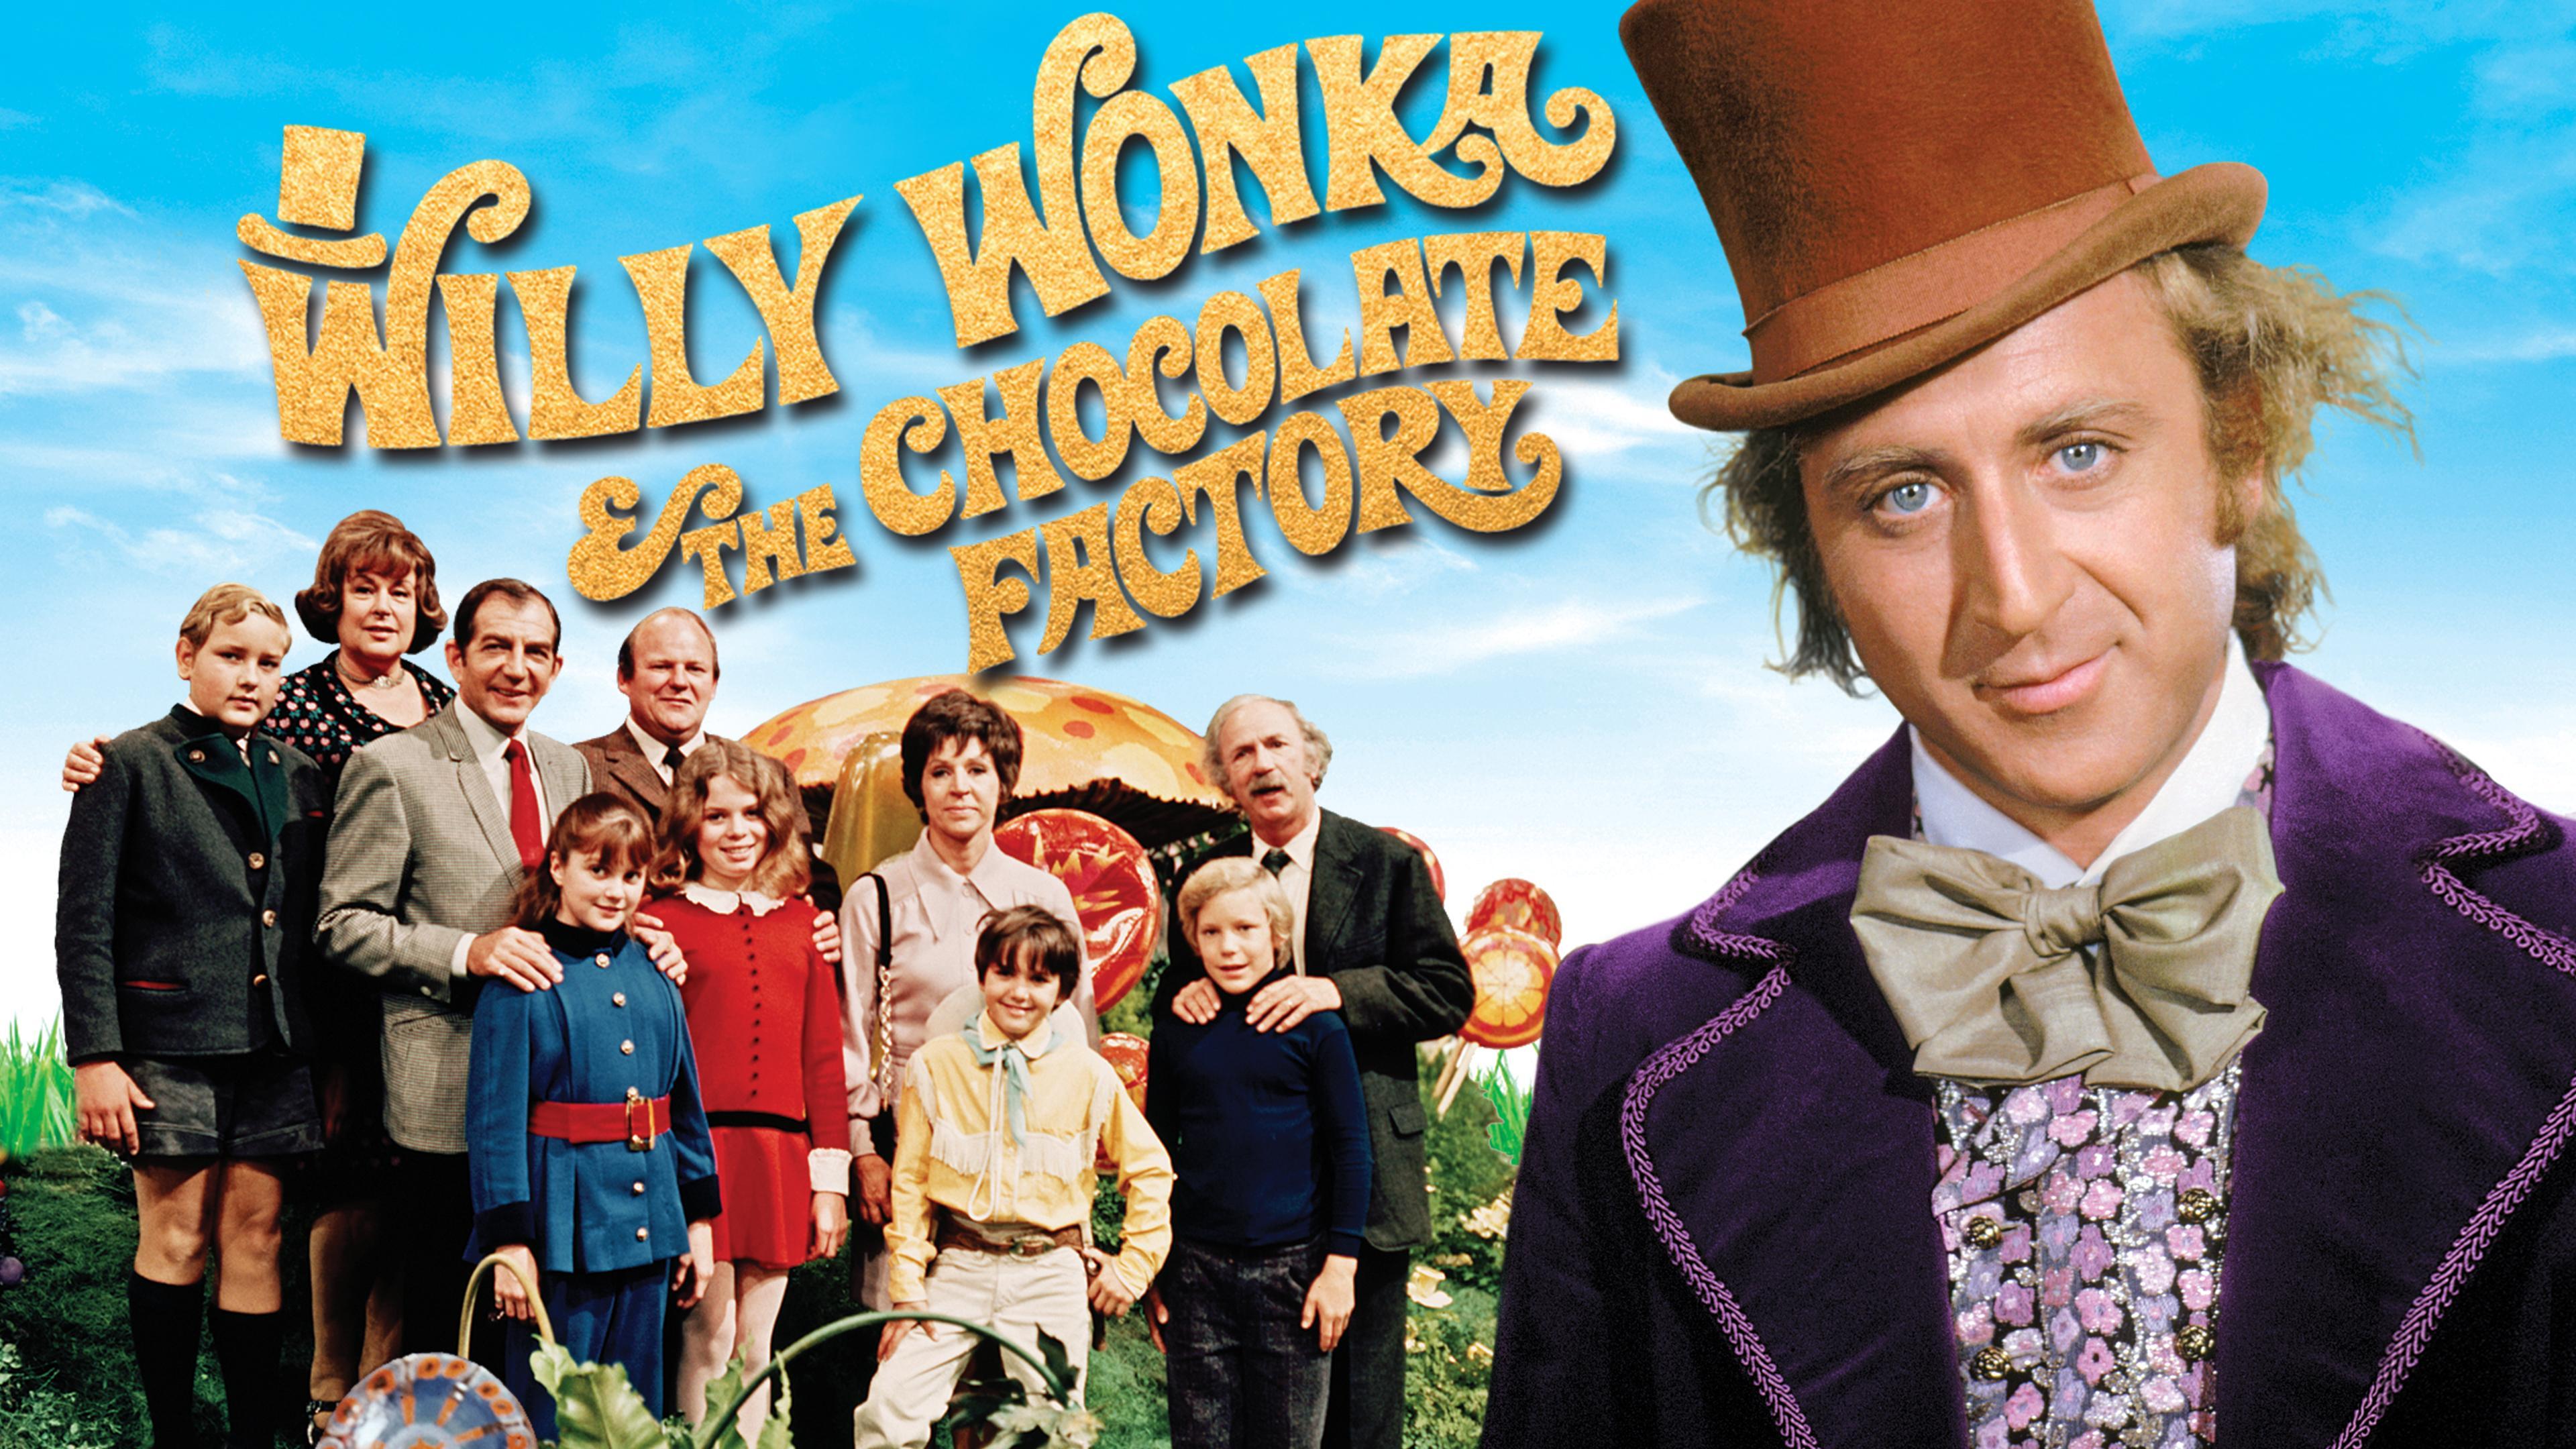 Willy Wonka - Carnival Store GmbH